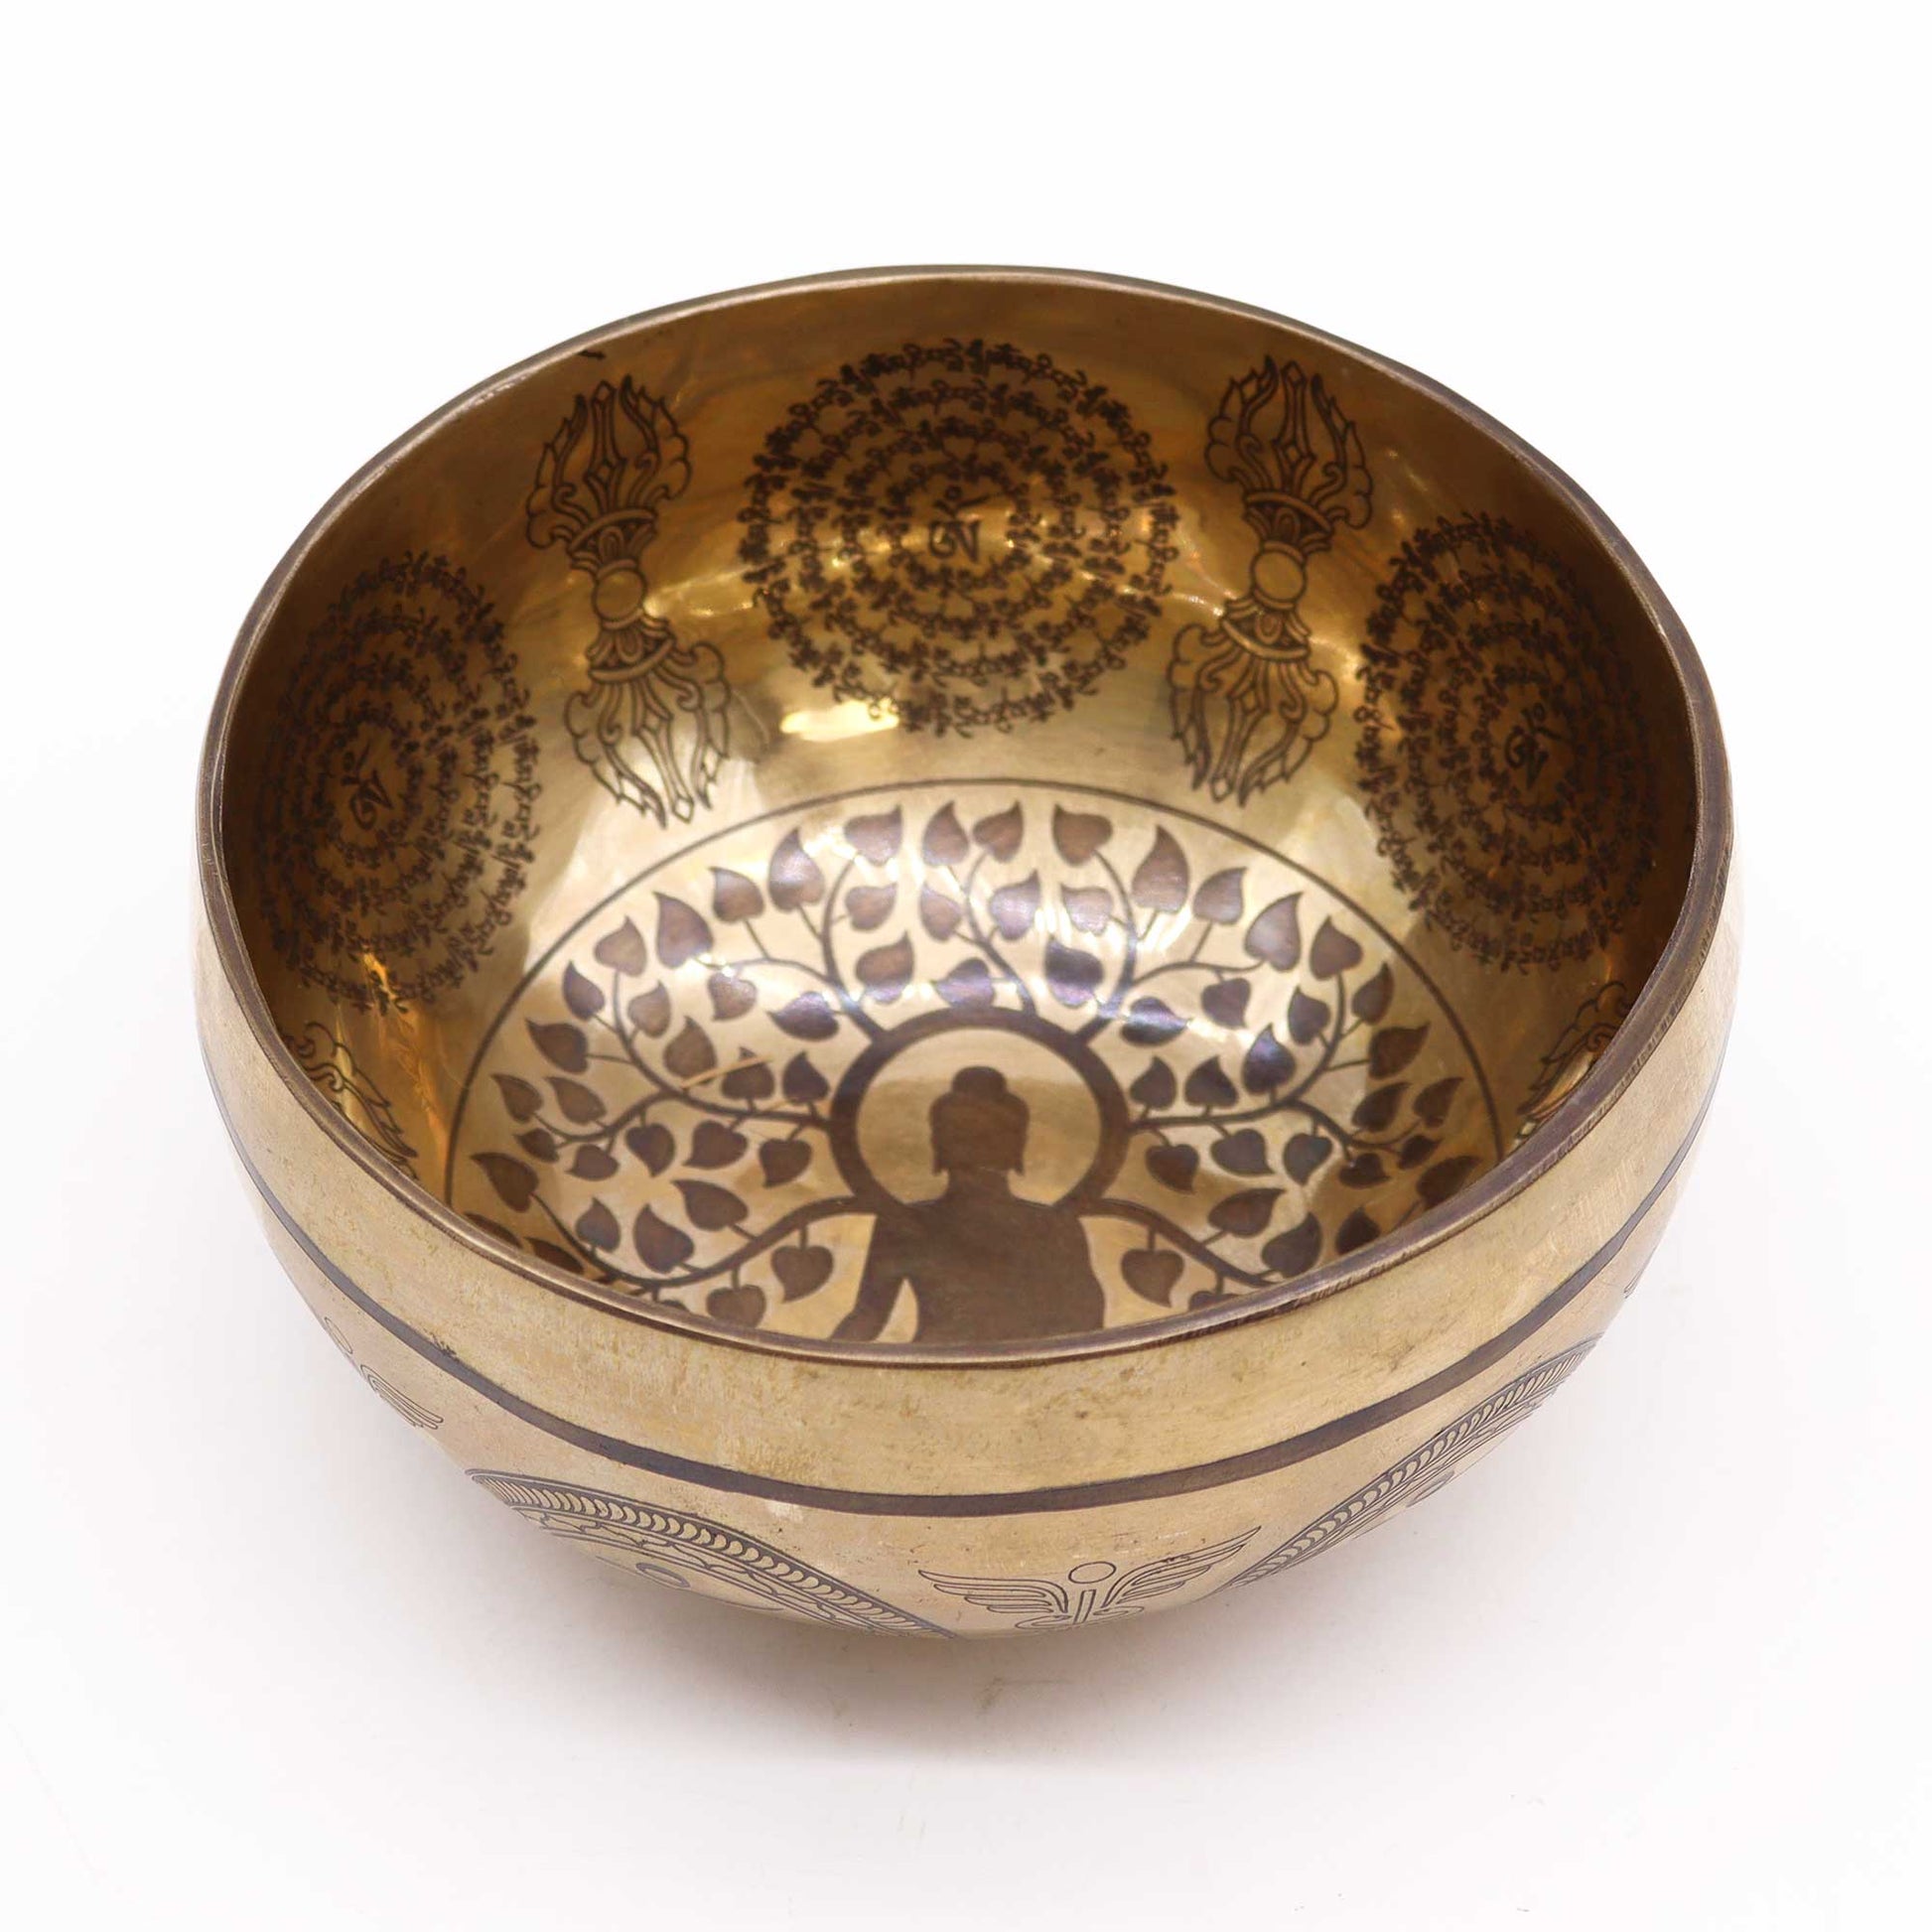 Tibetan Healing Engraved Bowl - 16cm - Bodhi Tree Buddha - Positive Faith Hope Love